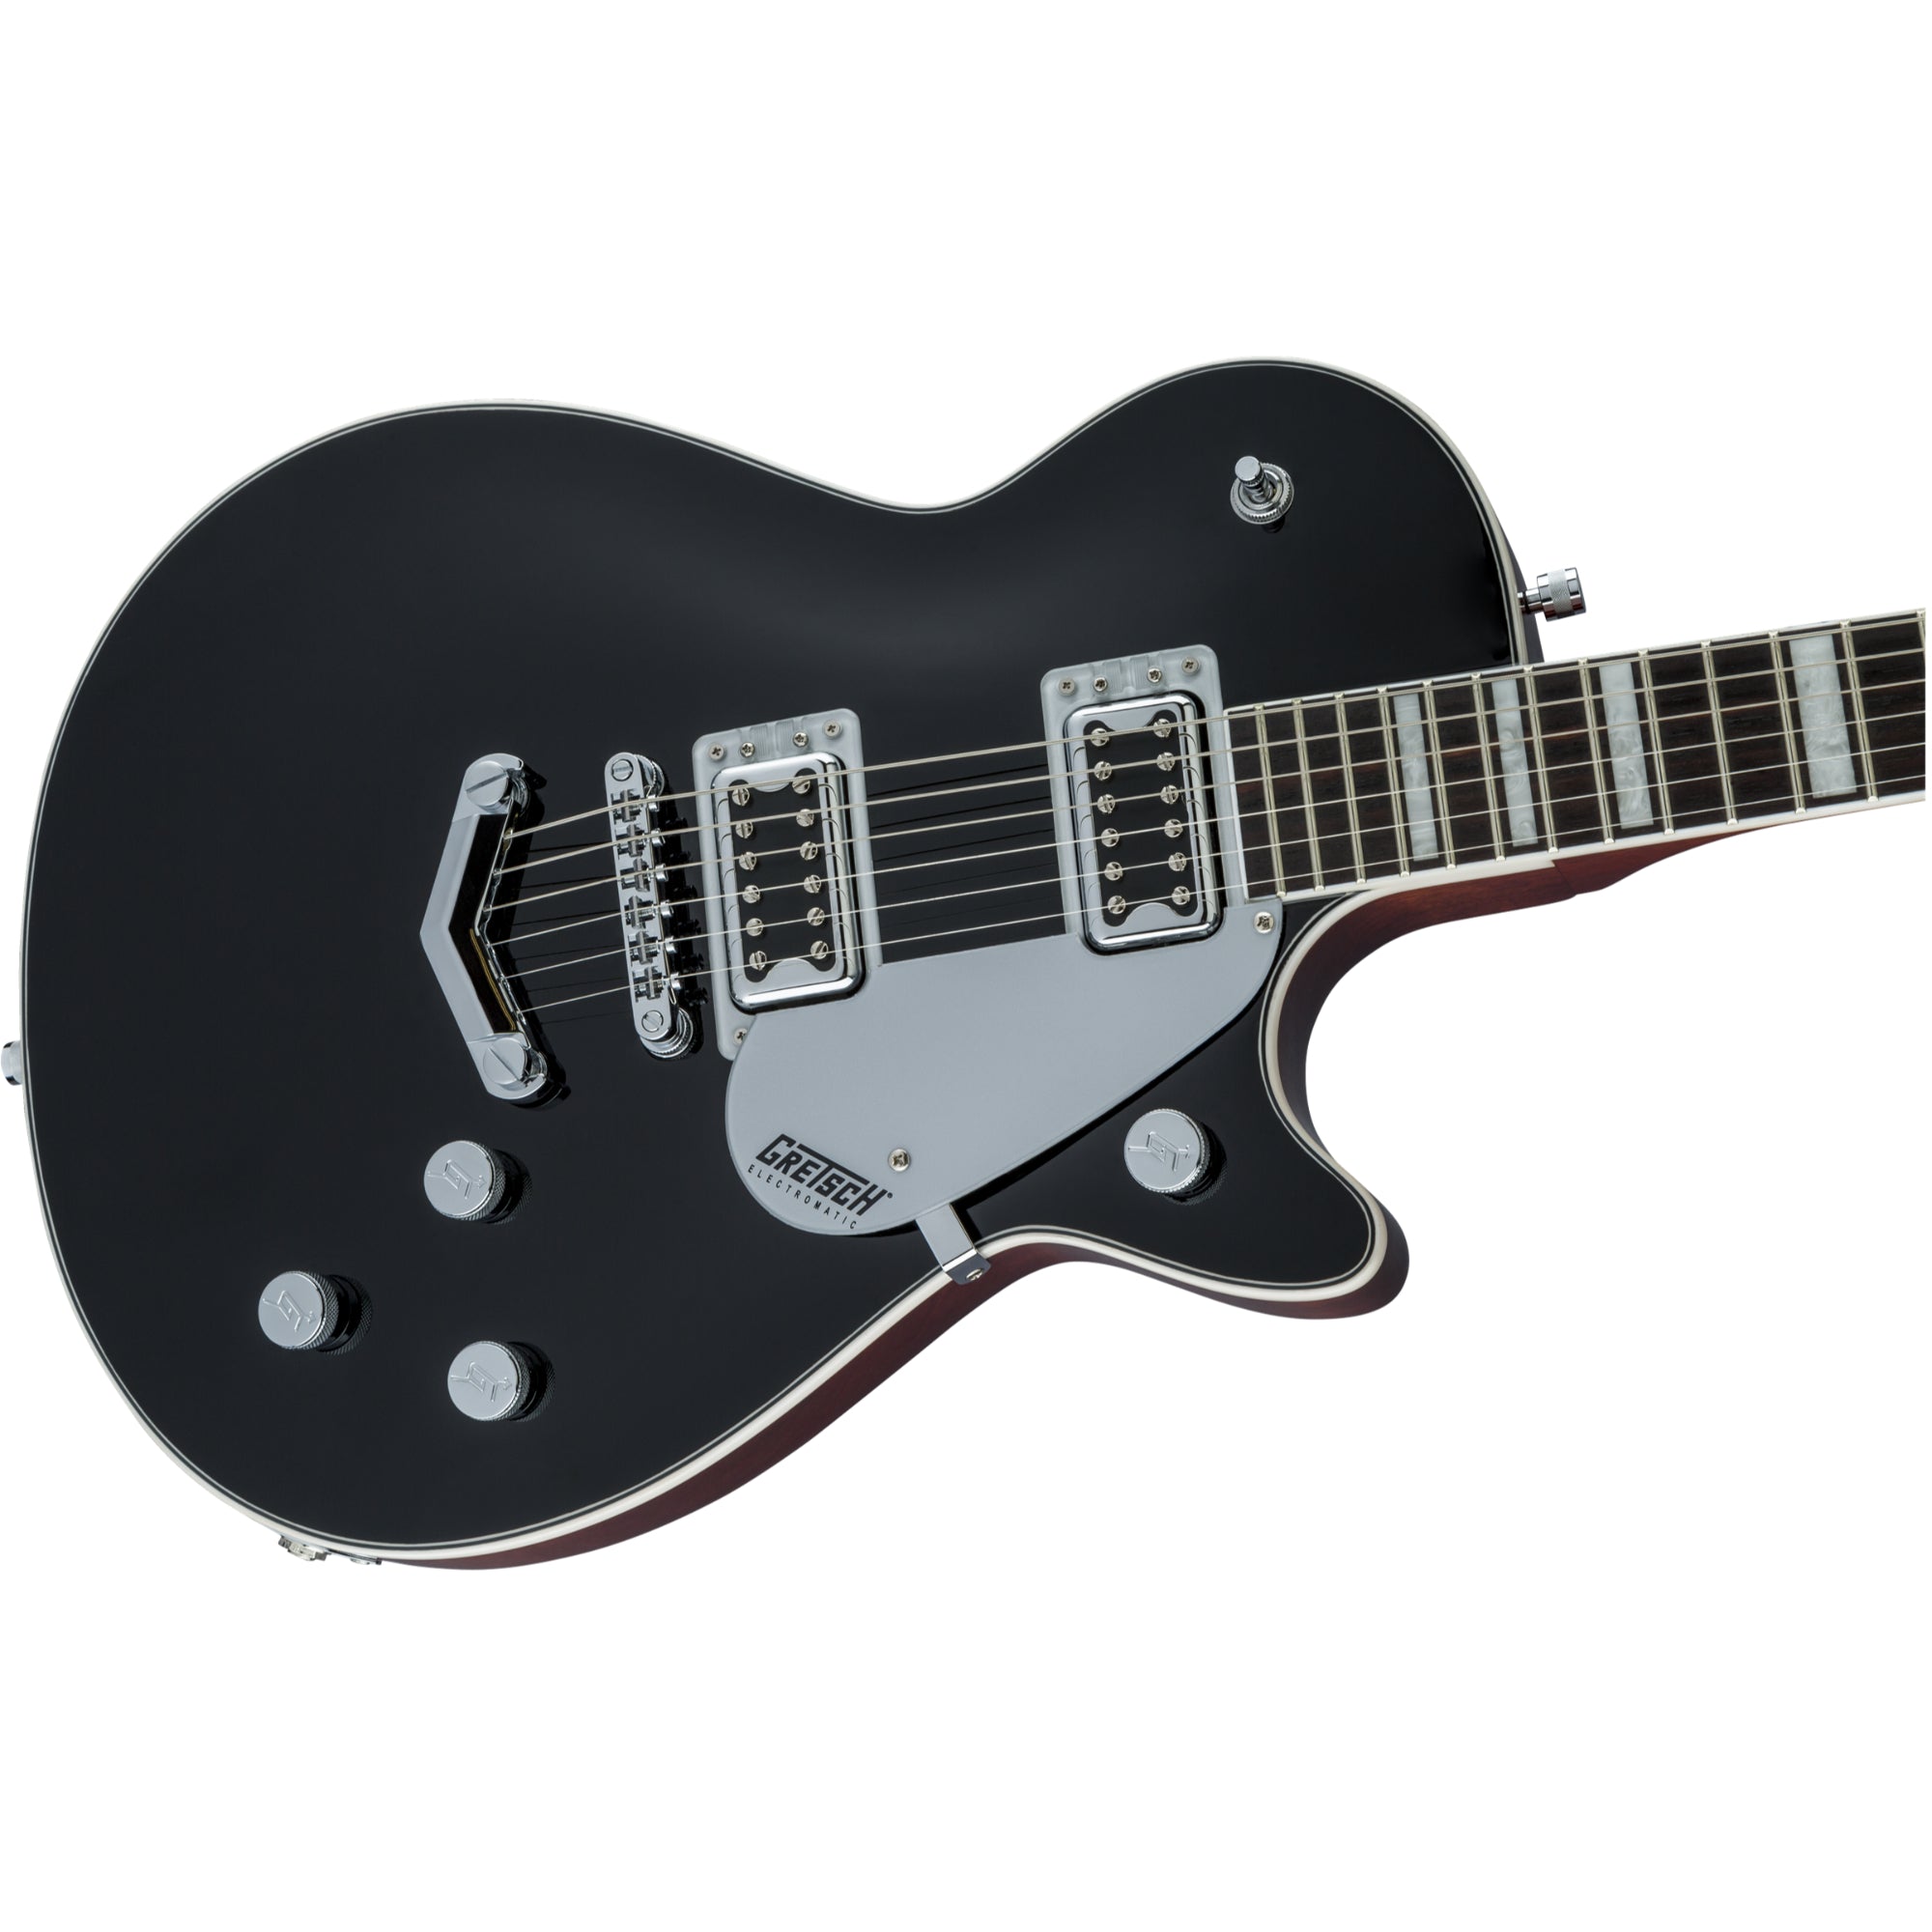 Gretsch G5220 Jet Electromatic Black Guitar